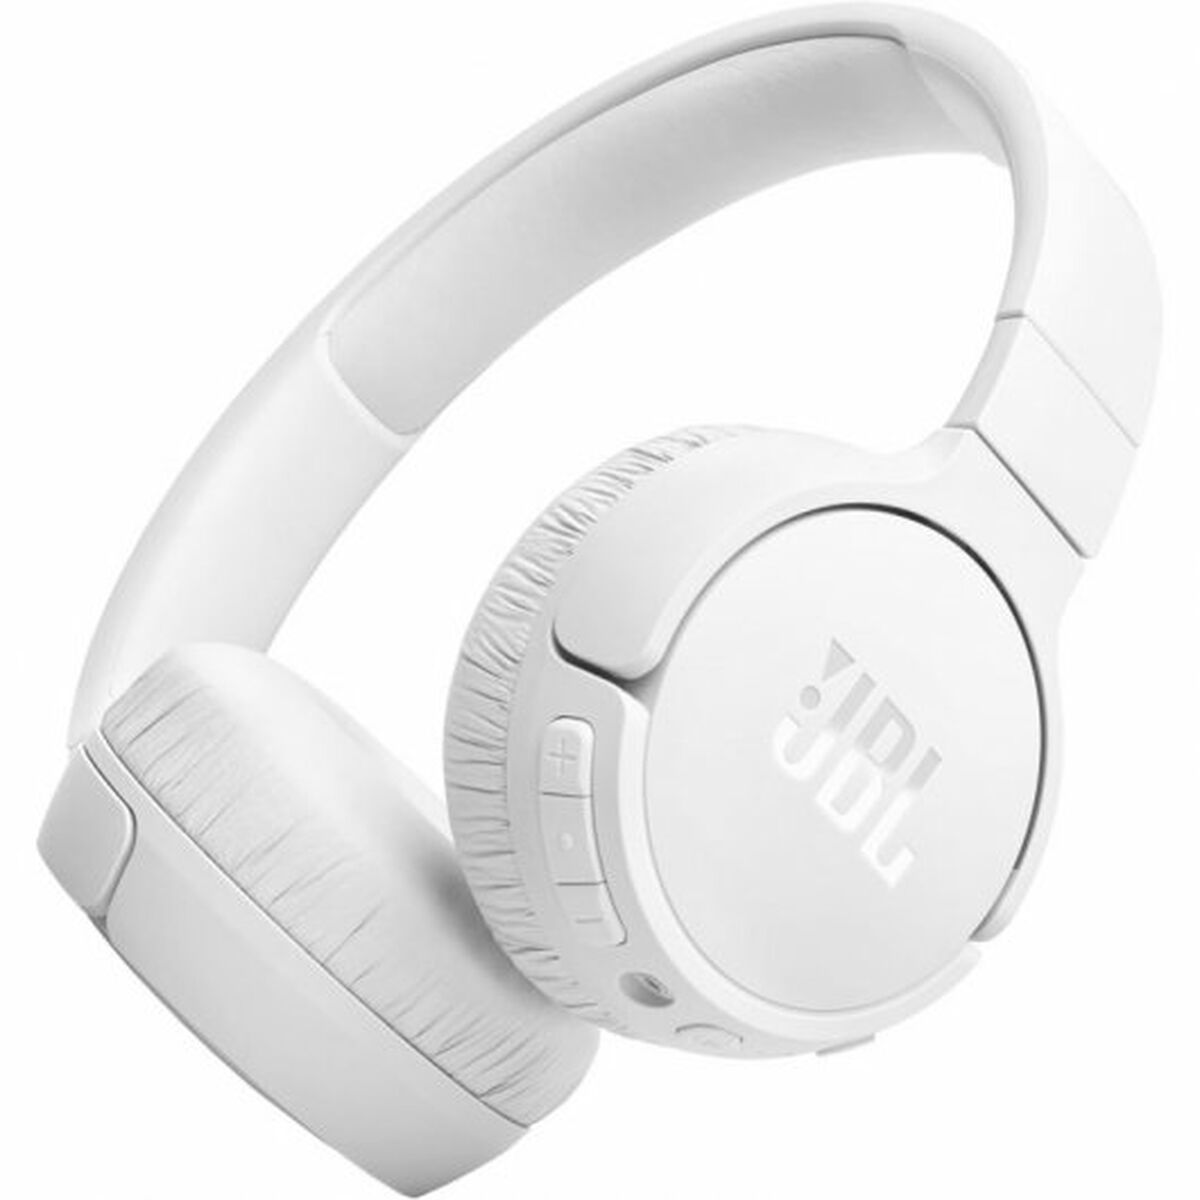 Kaufe Kopfhörer mit Mikrofon JBL 670NC Weiß bei AWK Flagship um € 125.00